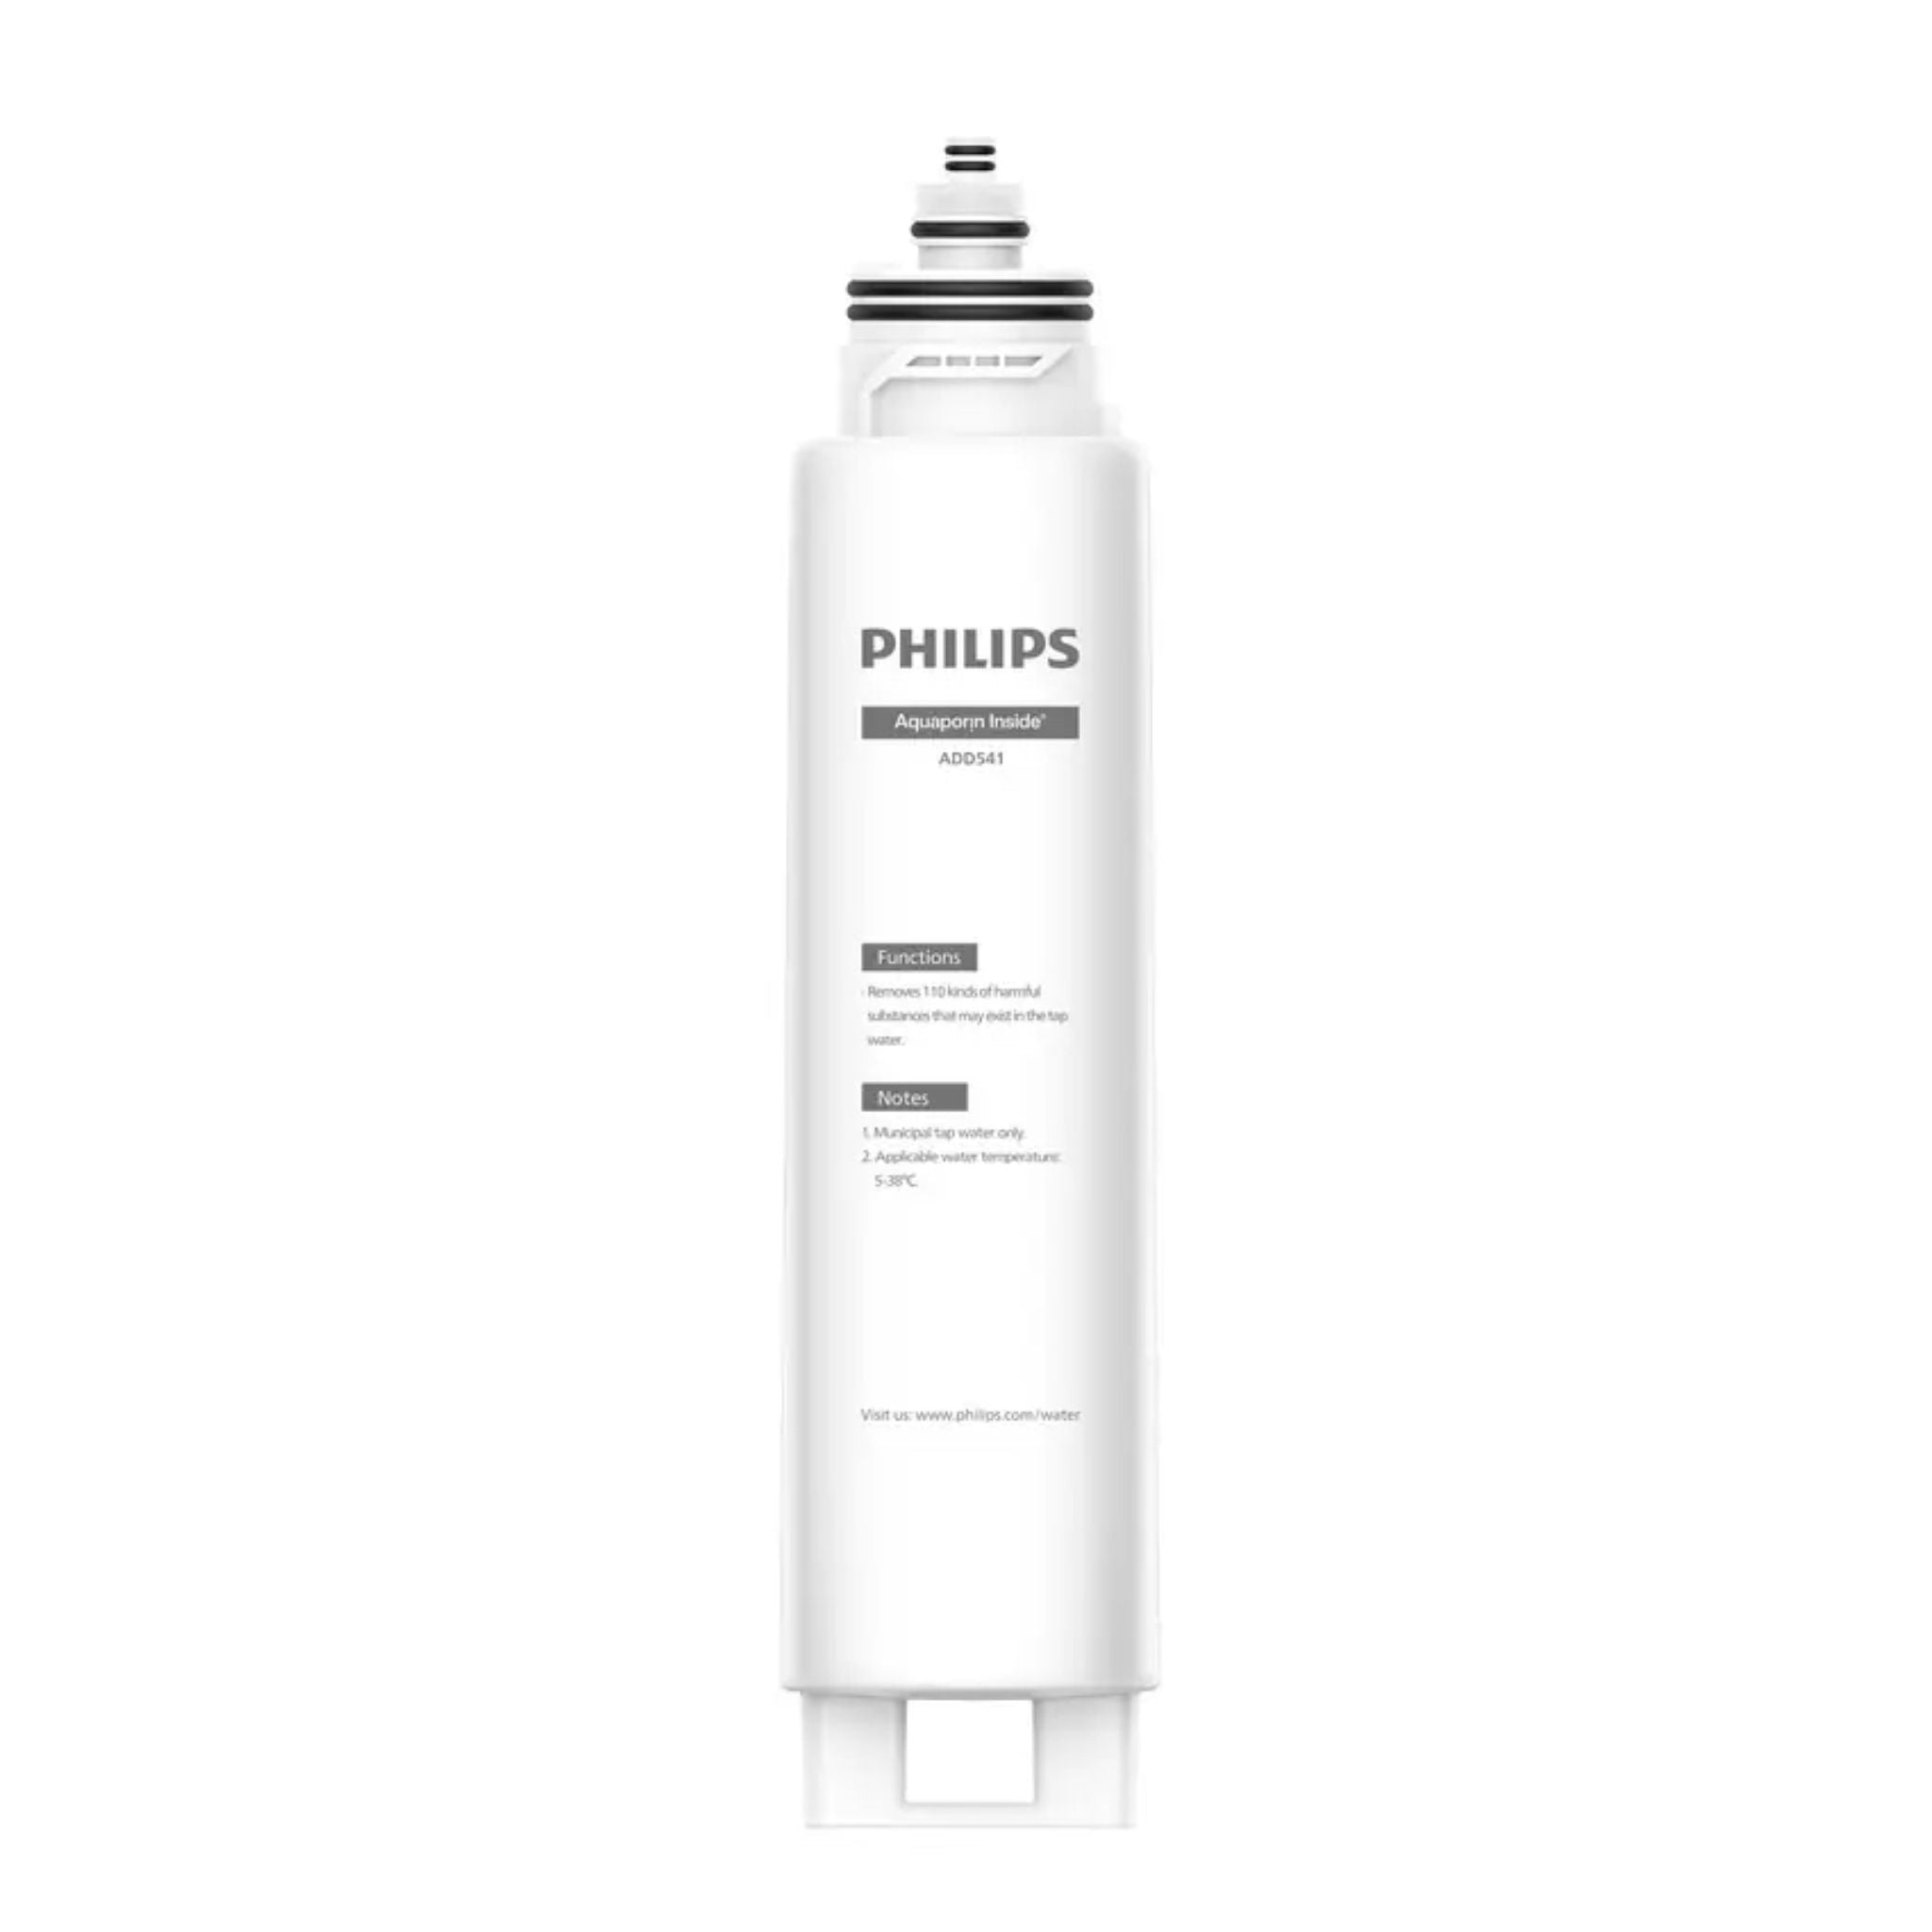 Philips Water Filter Cartridge - White (ADD541RO-90)